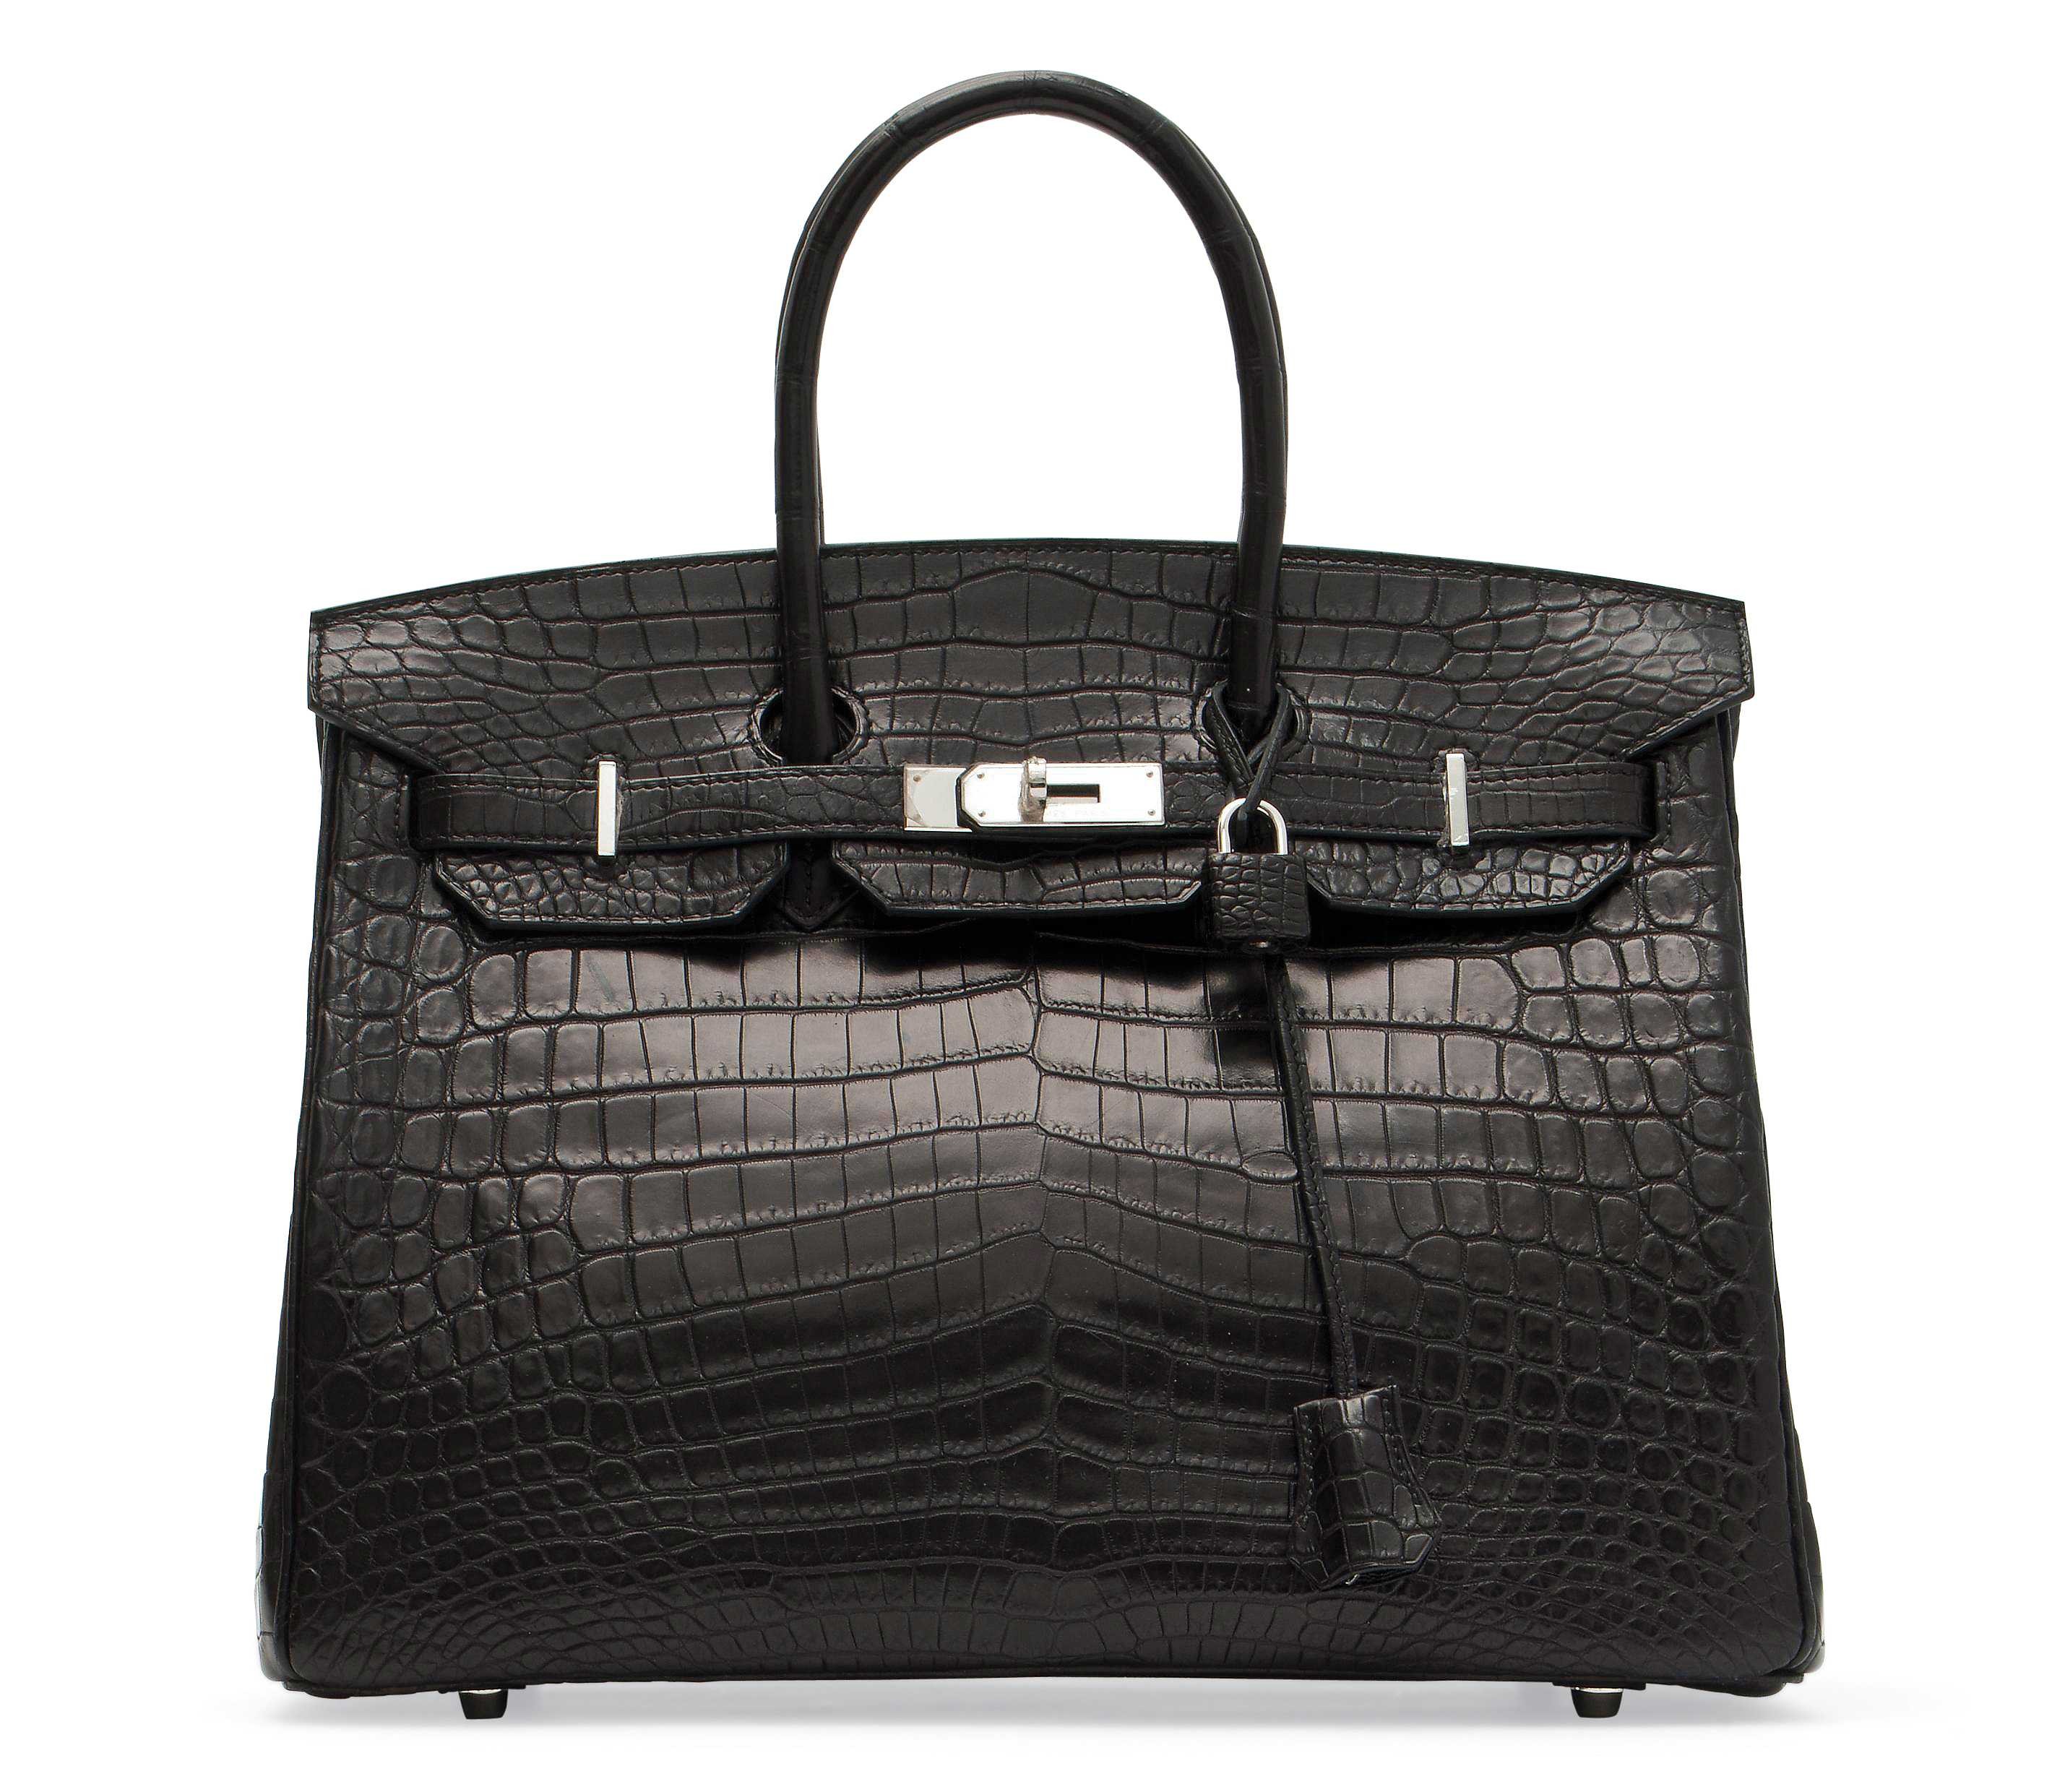 Bolsa Birkin, da Hermès (Foto: Divulgação)